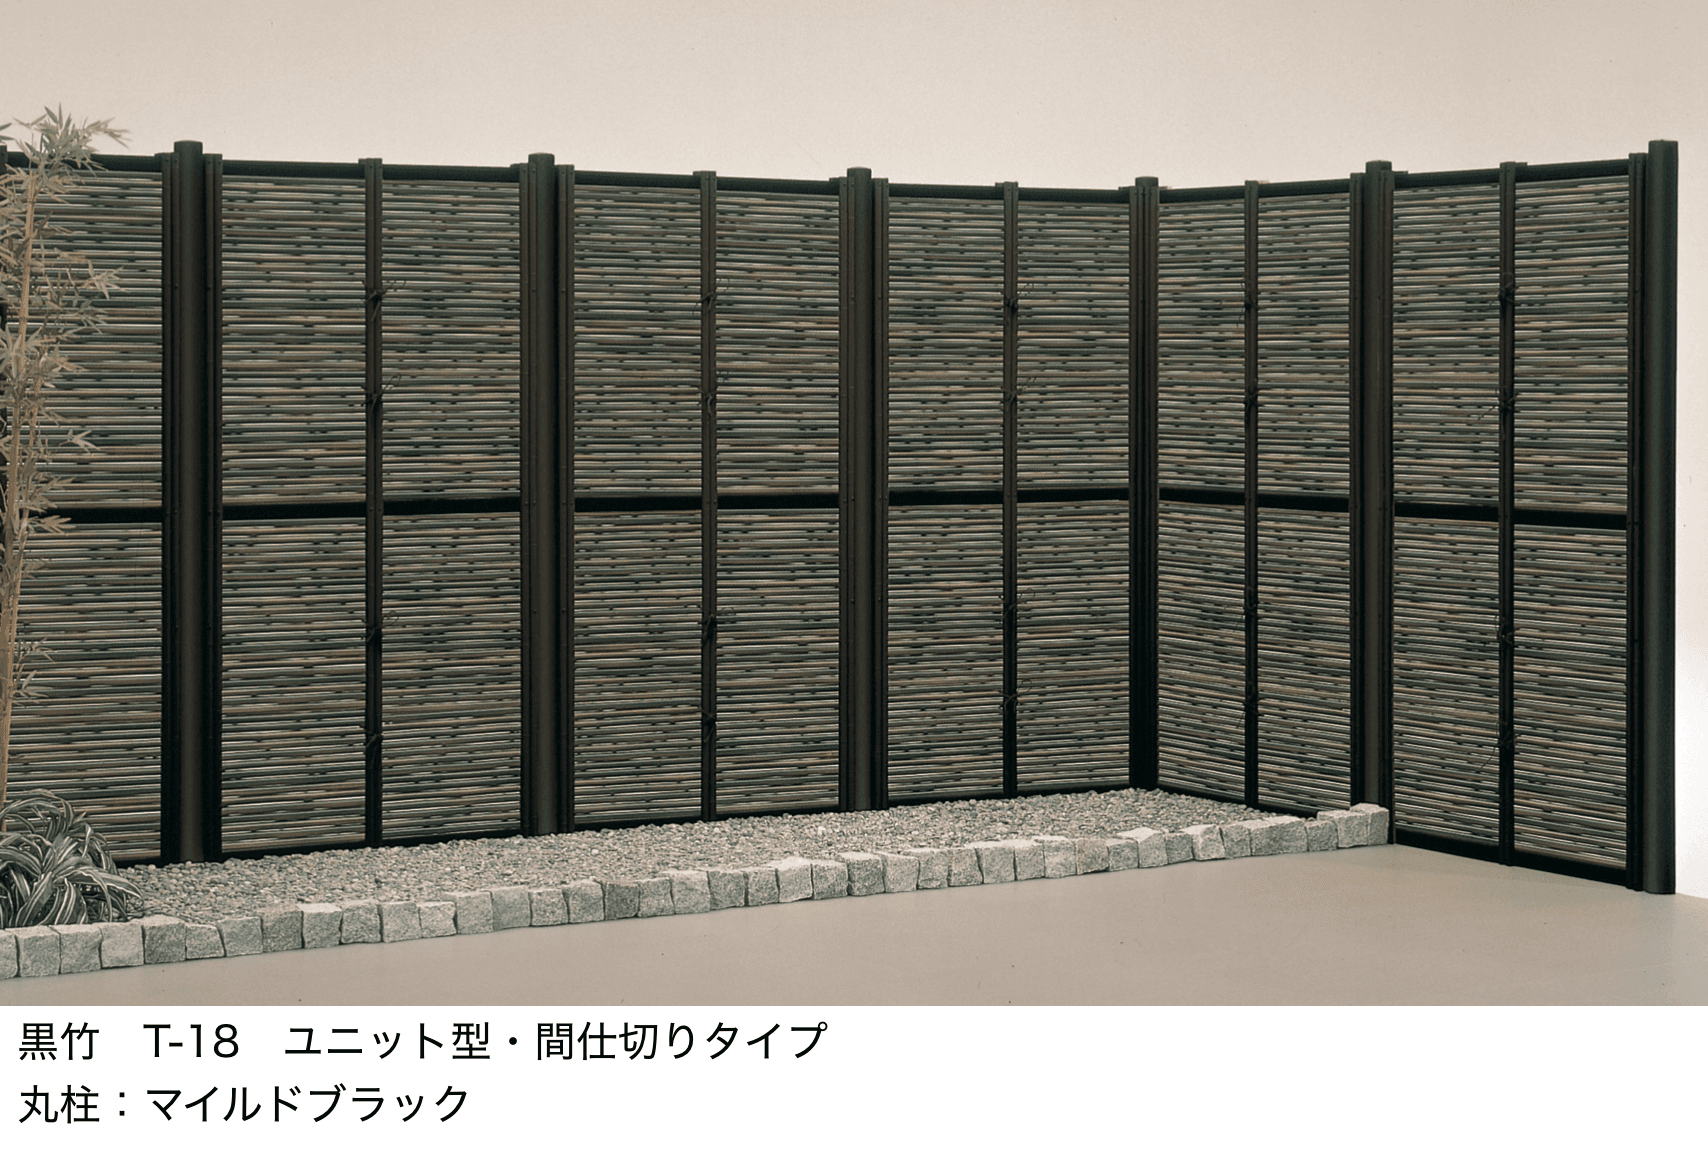 LIXIL | 京香・デザイン御簾垣(みすがき)ユニット型1型【2022年版